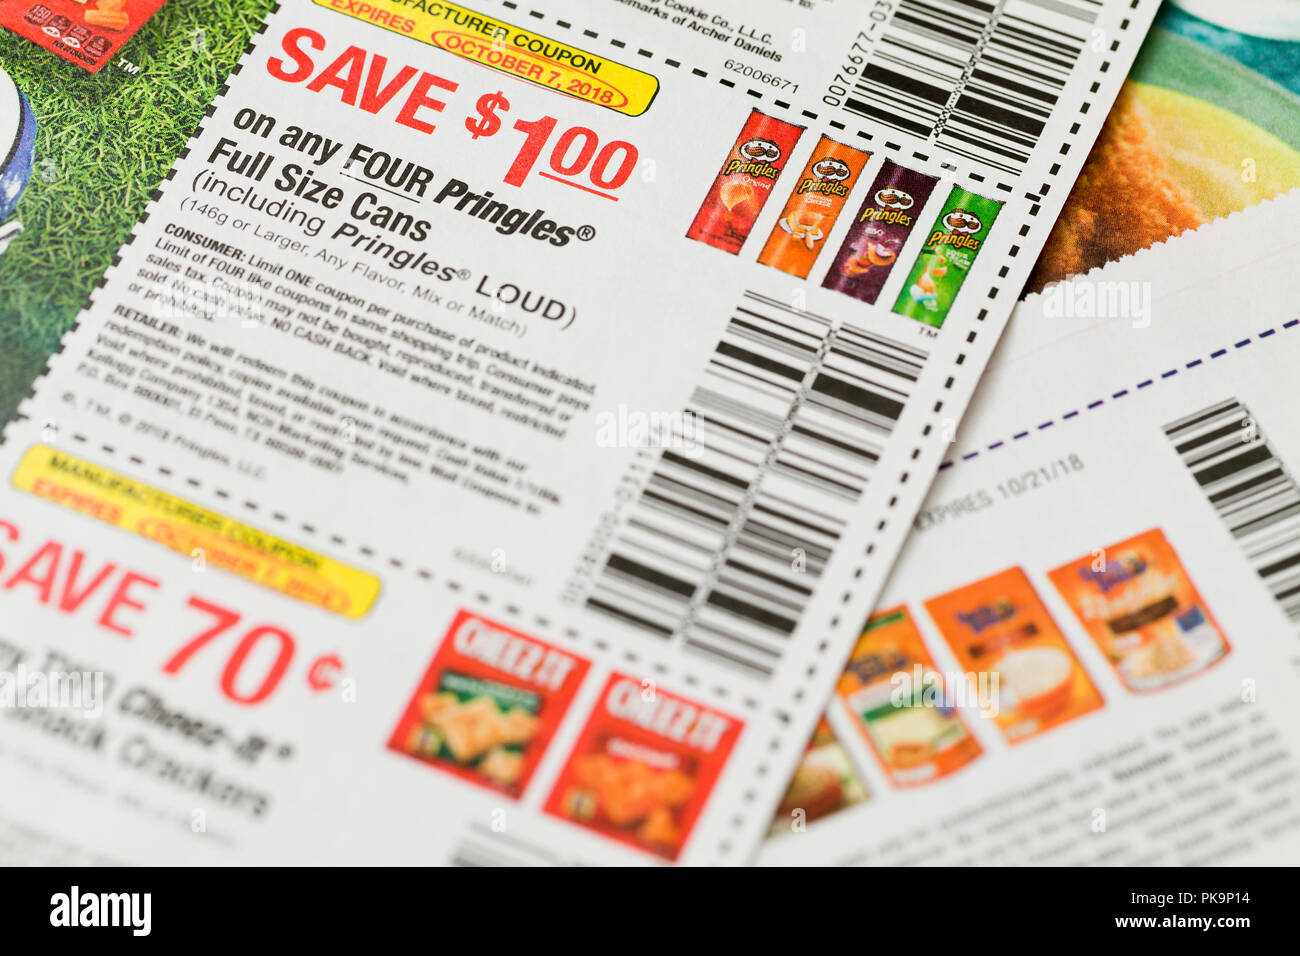 $1 coupon on Pringles potato chips - USA Stock Photo